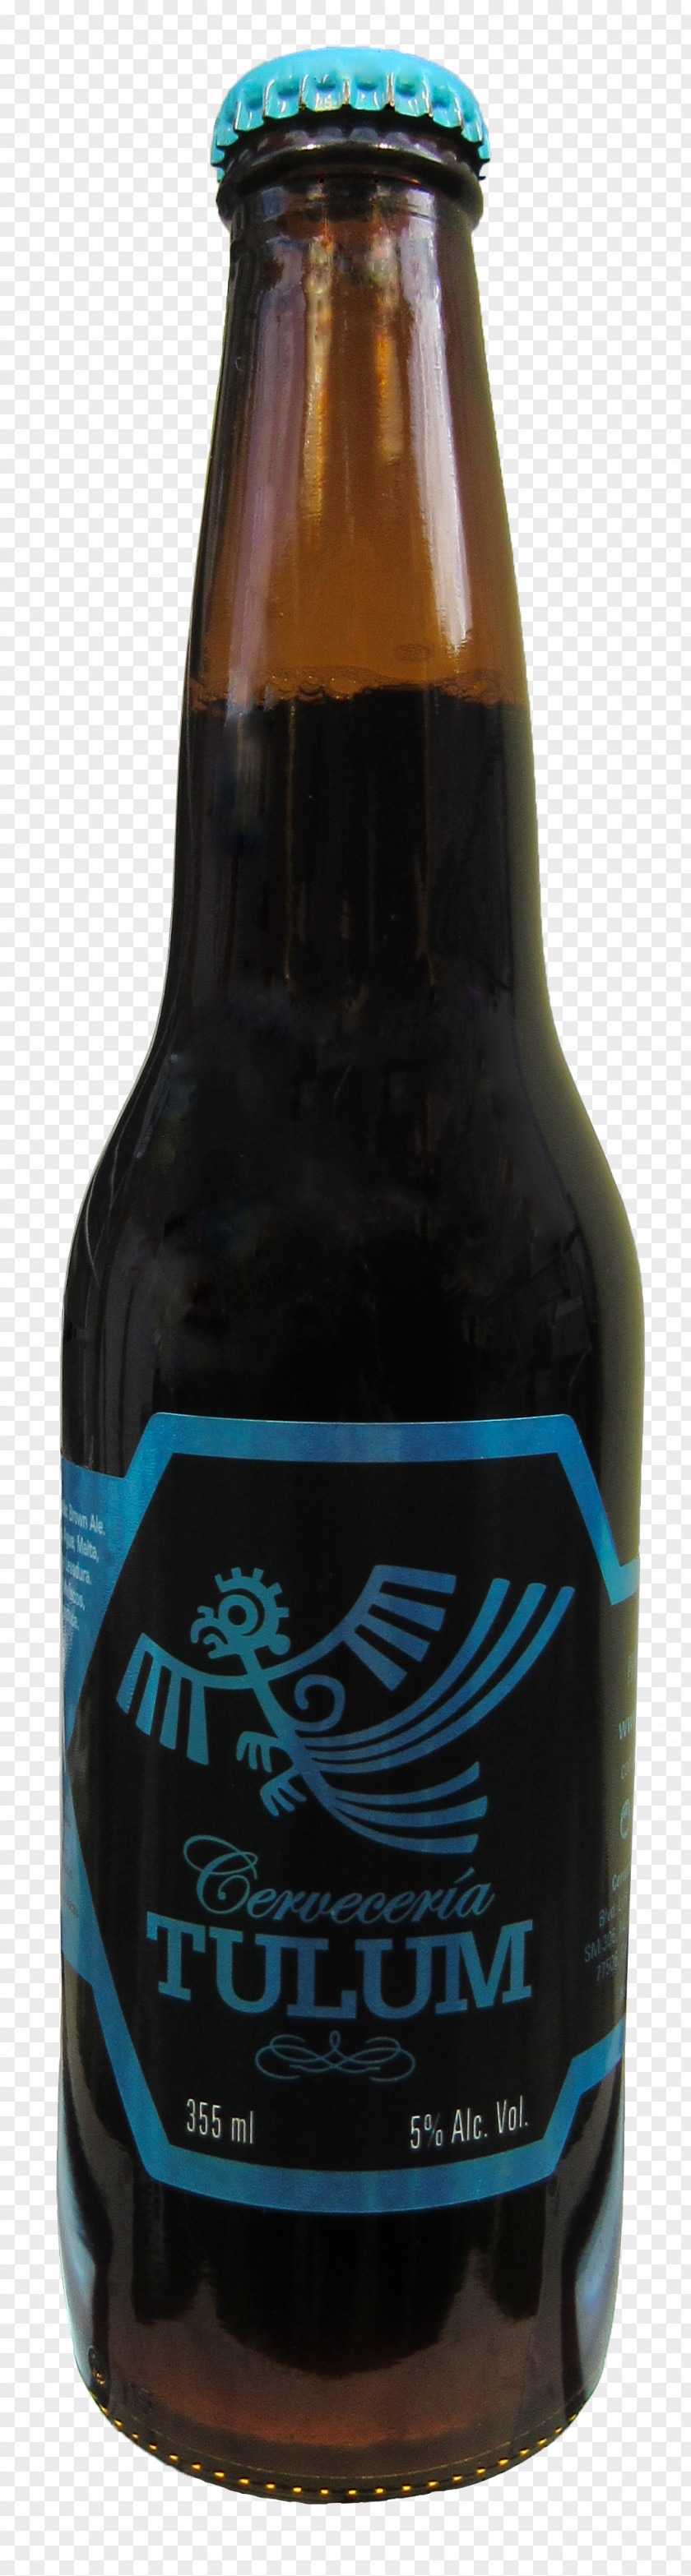 Beer Ale Bottle Wine Glass PNG